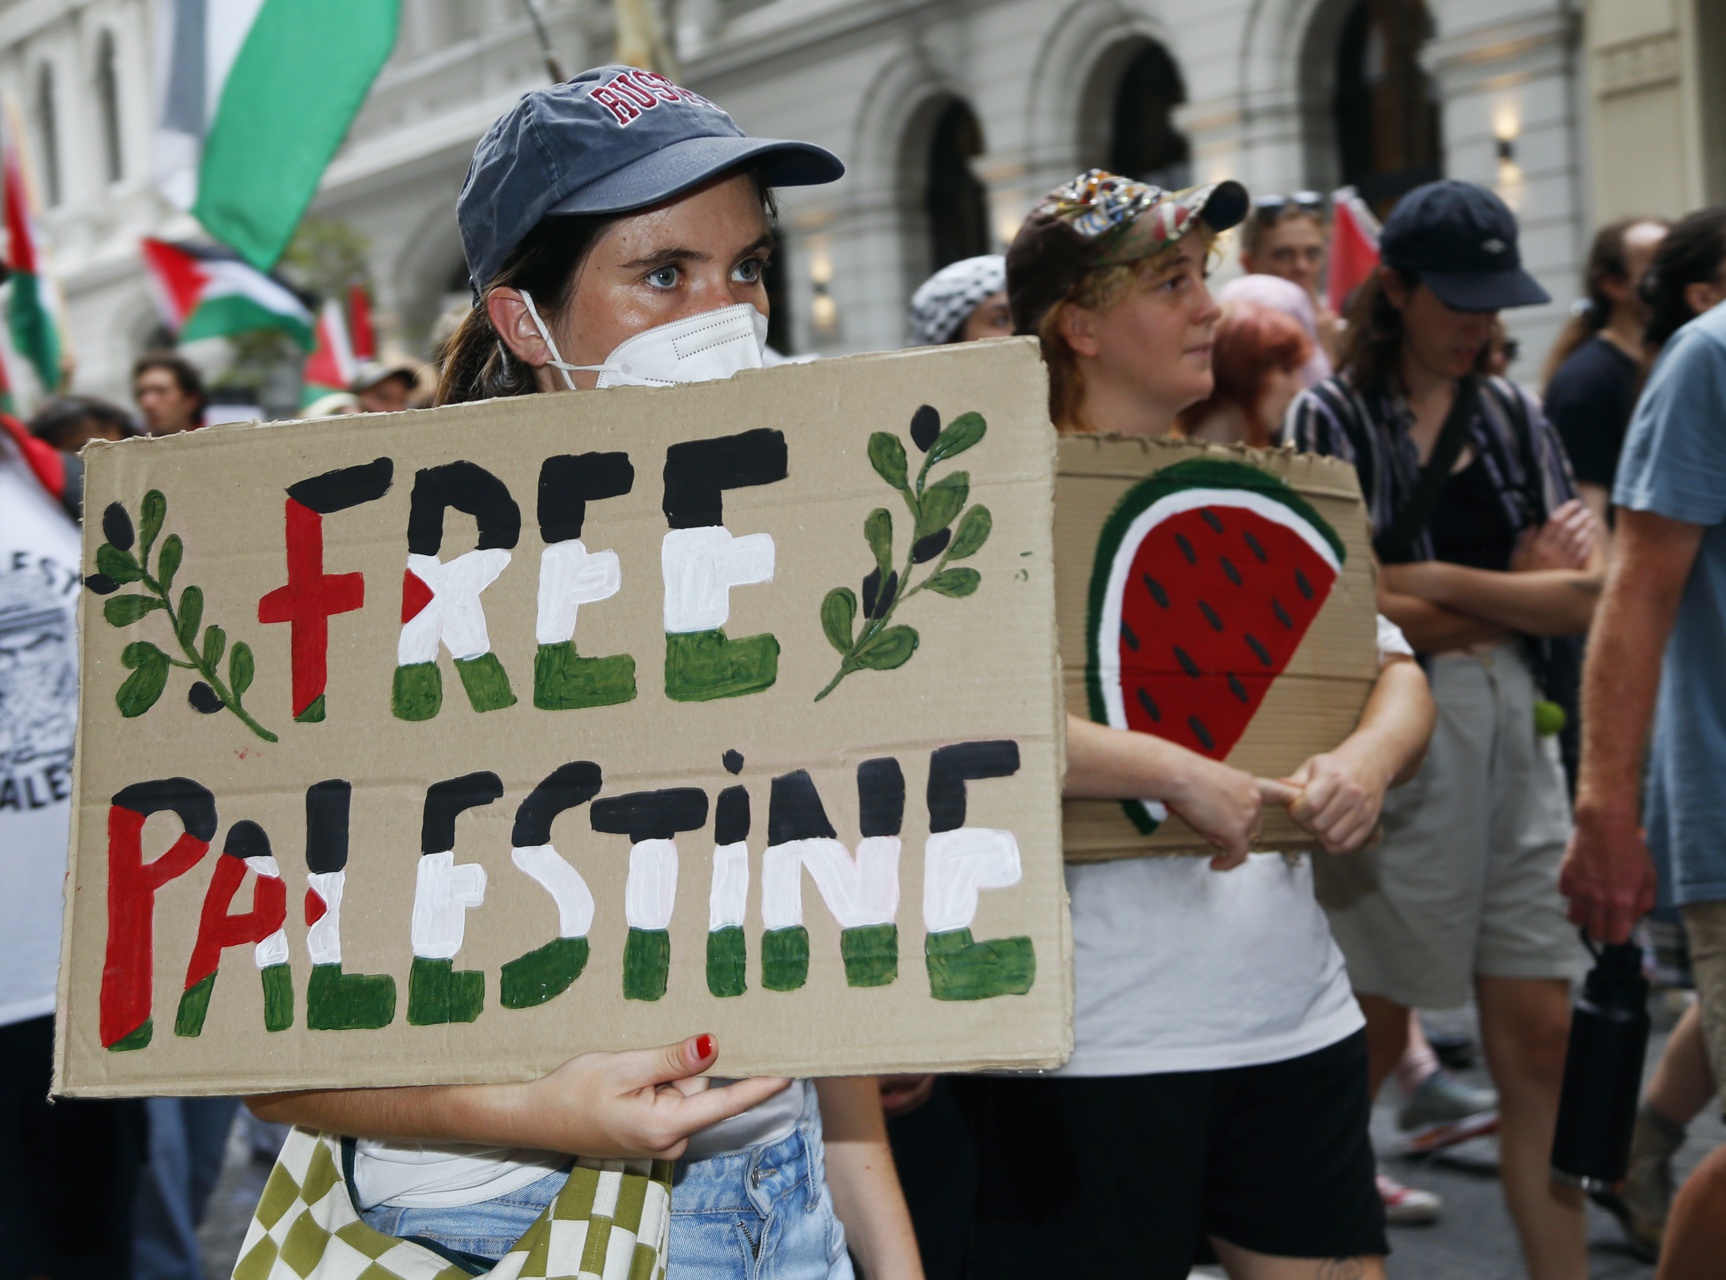 Free Palestine, Magan-djin/Brisbane, April 7